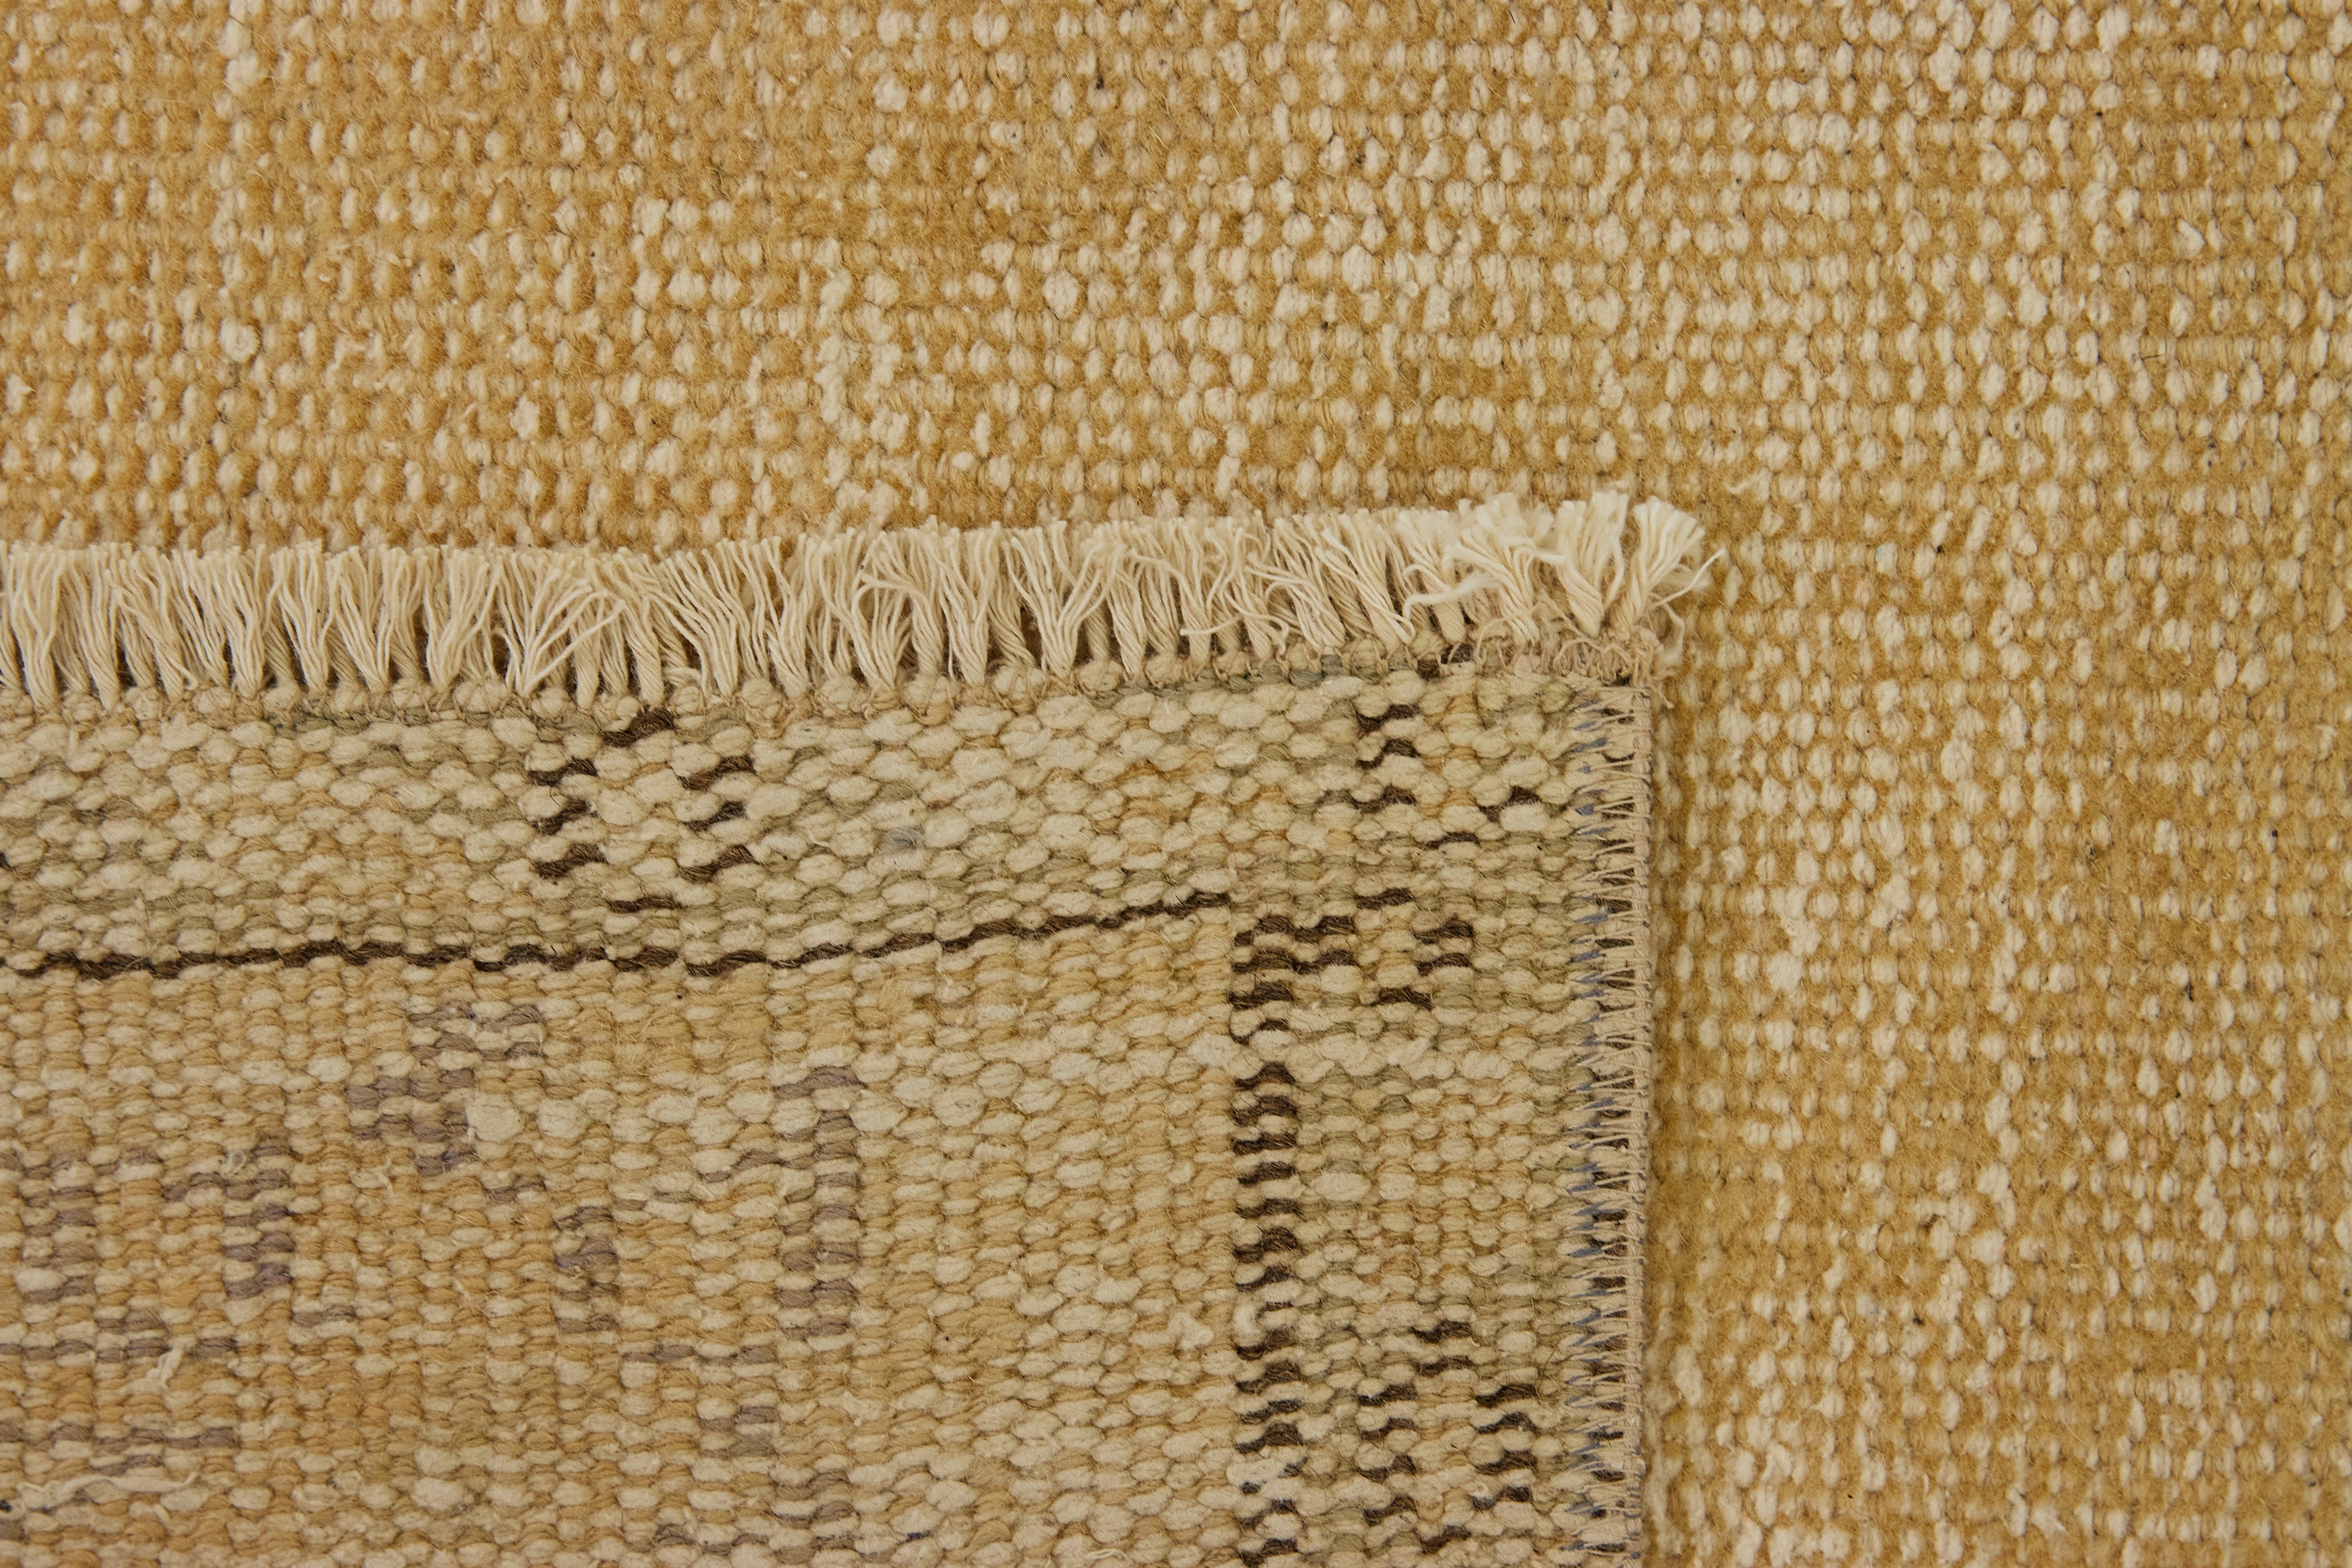 Sophisticated Weaving - Abbygail's Expert Turkish Carpet Craft